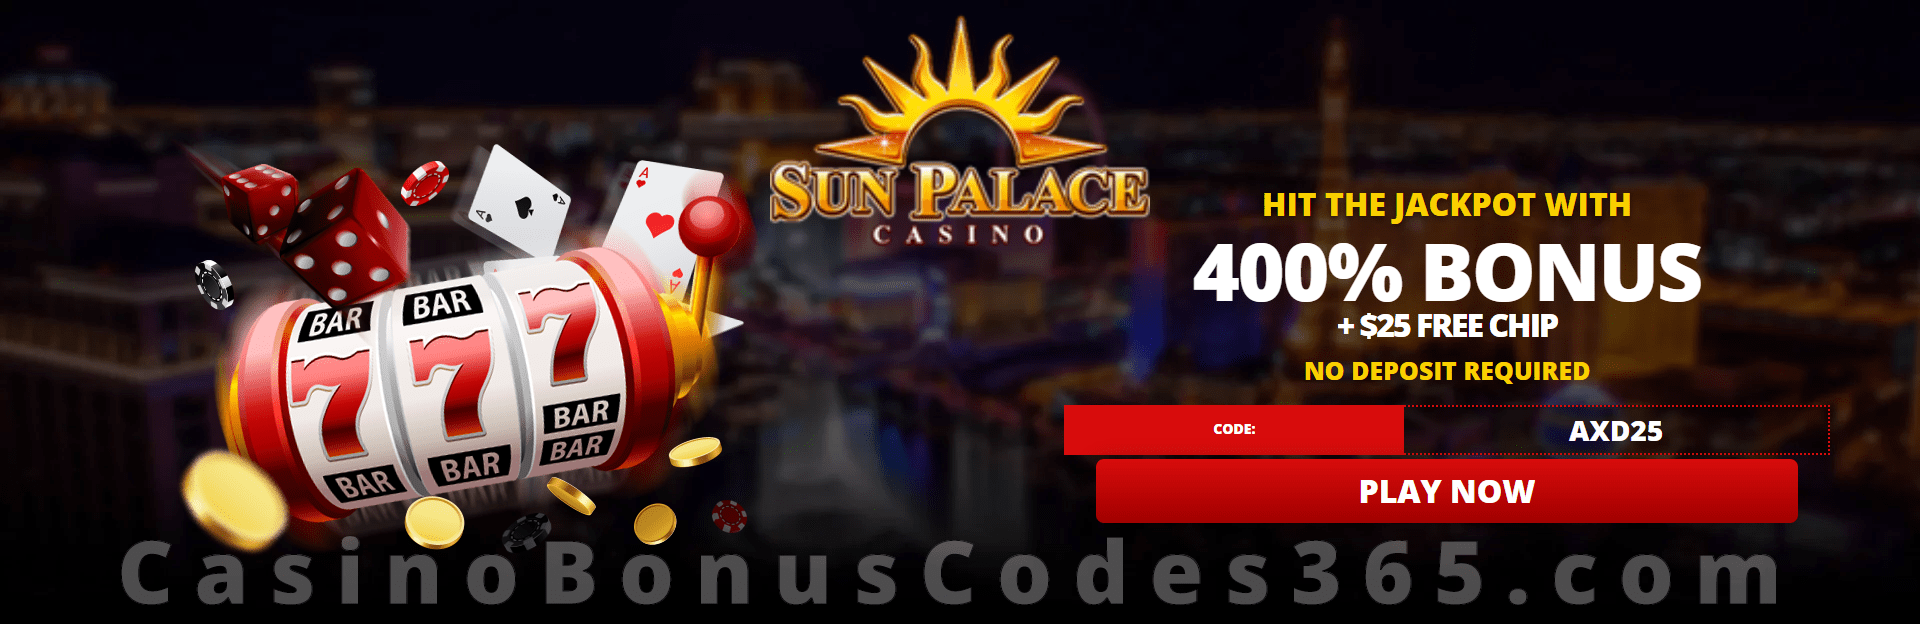 Sun palace casino no deposit bonus codes november 2019 printable